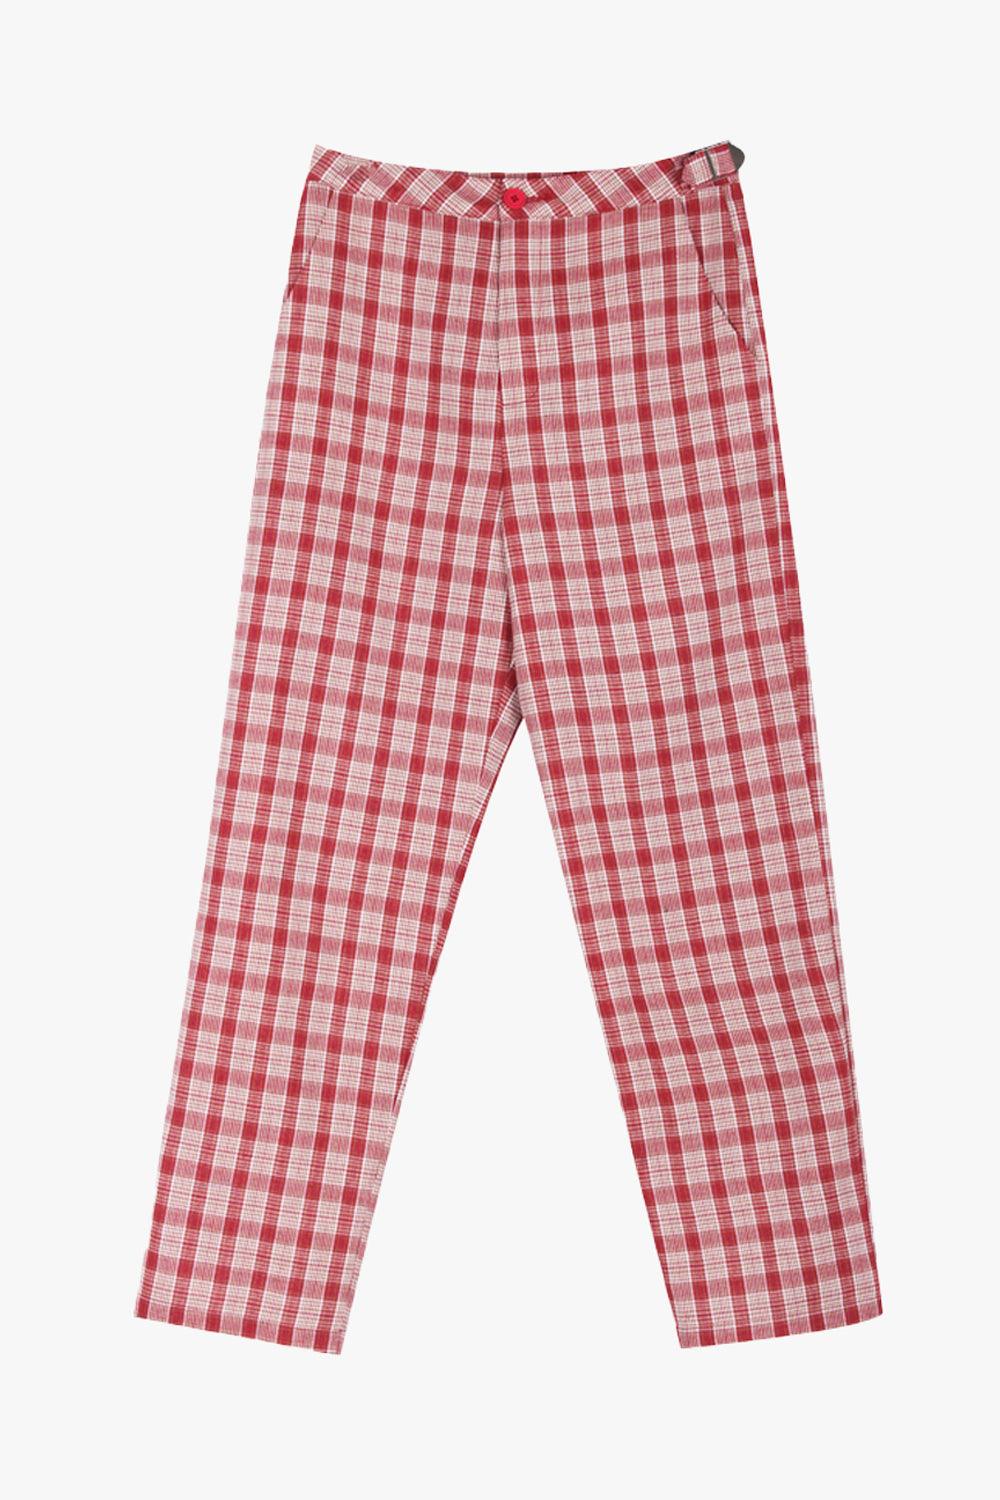 Peach Red Plaid High Waist Pants - Aesthetic Clothes Shop